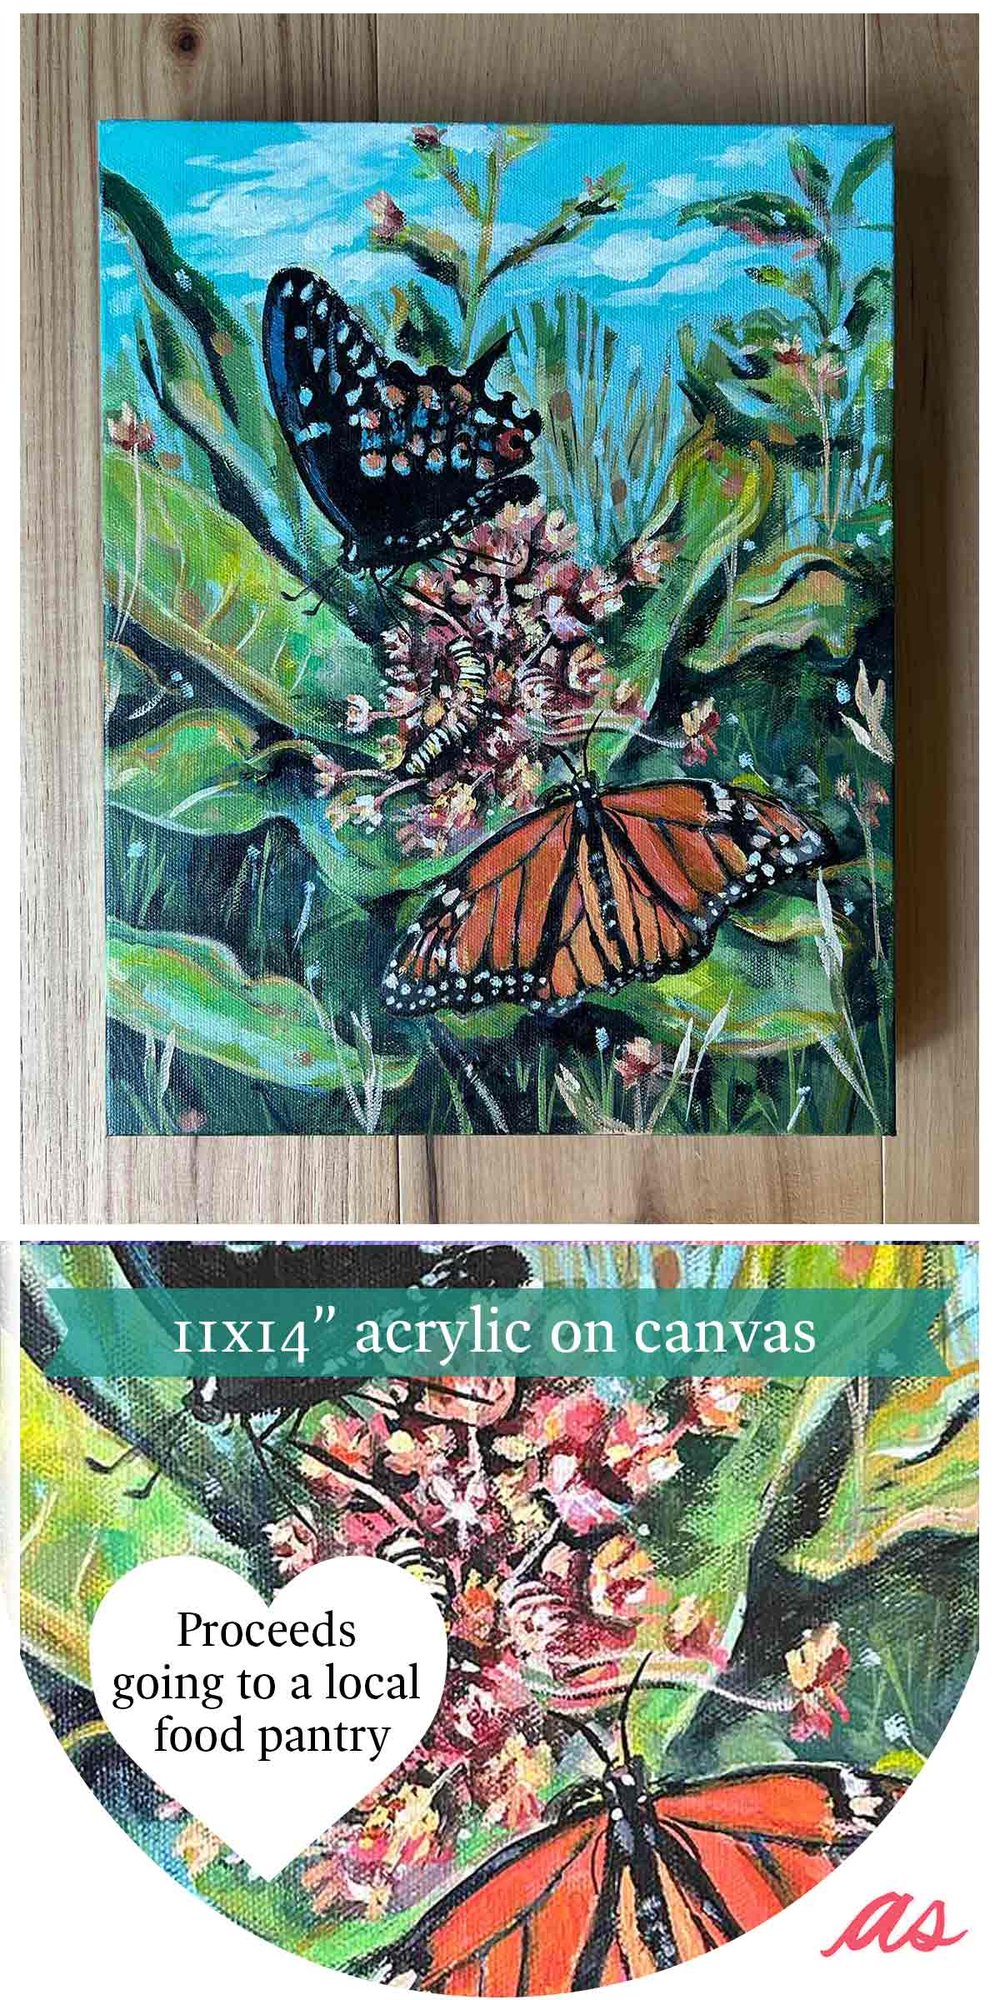 Flutter By – butterflies painting